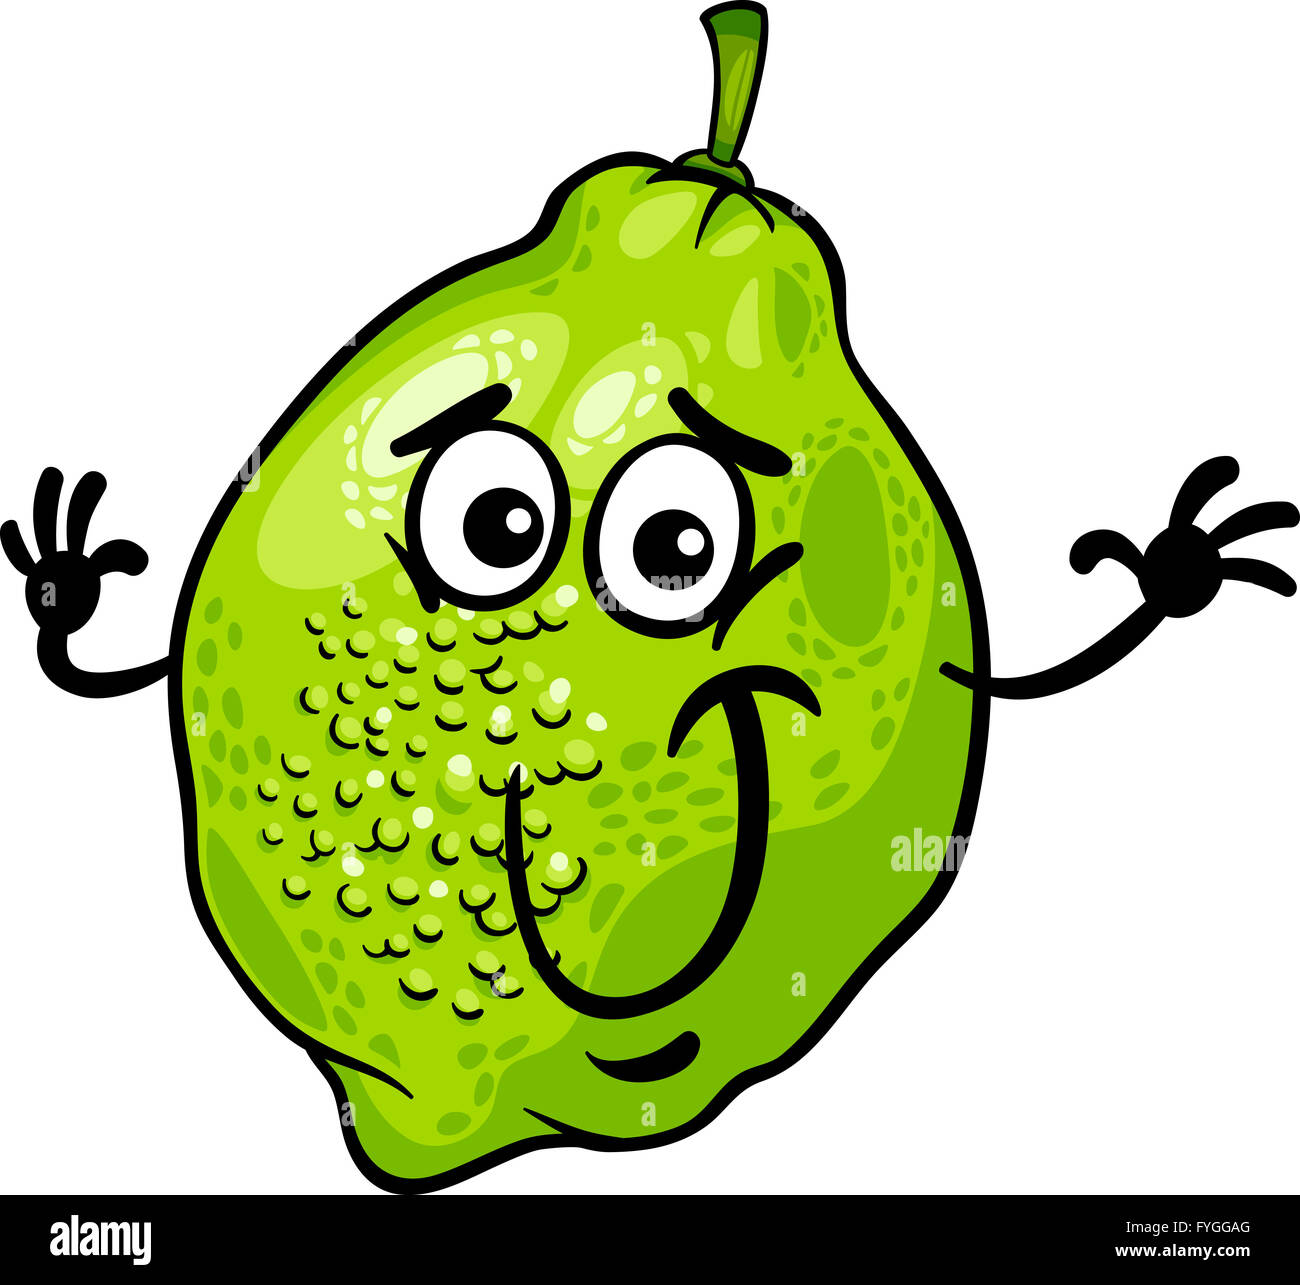 funny lime fruit cartoon illustration Stock Photo - Alamy